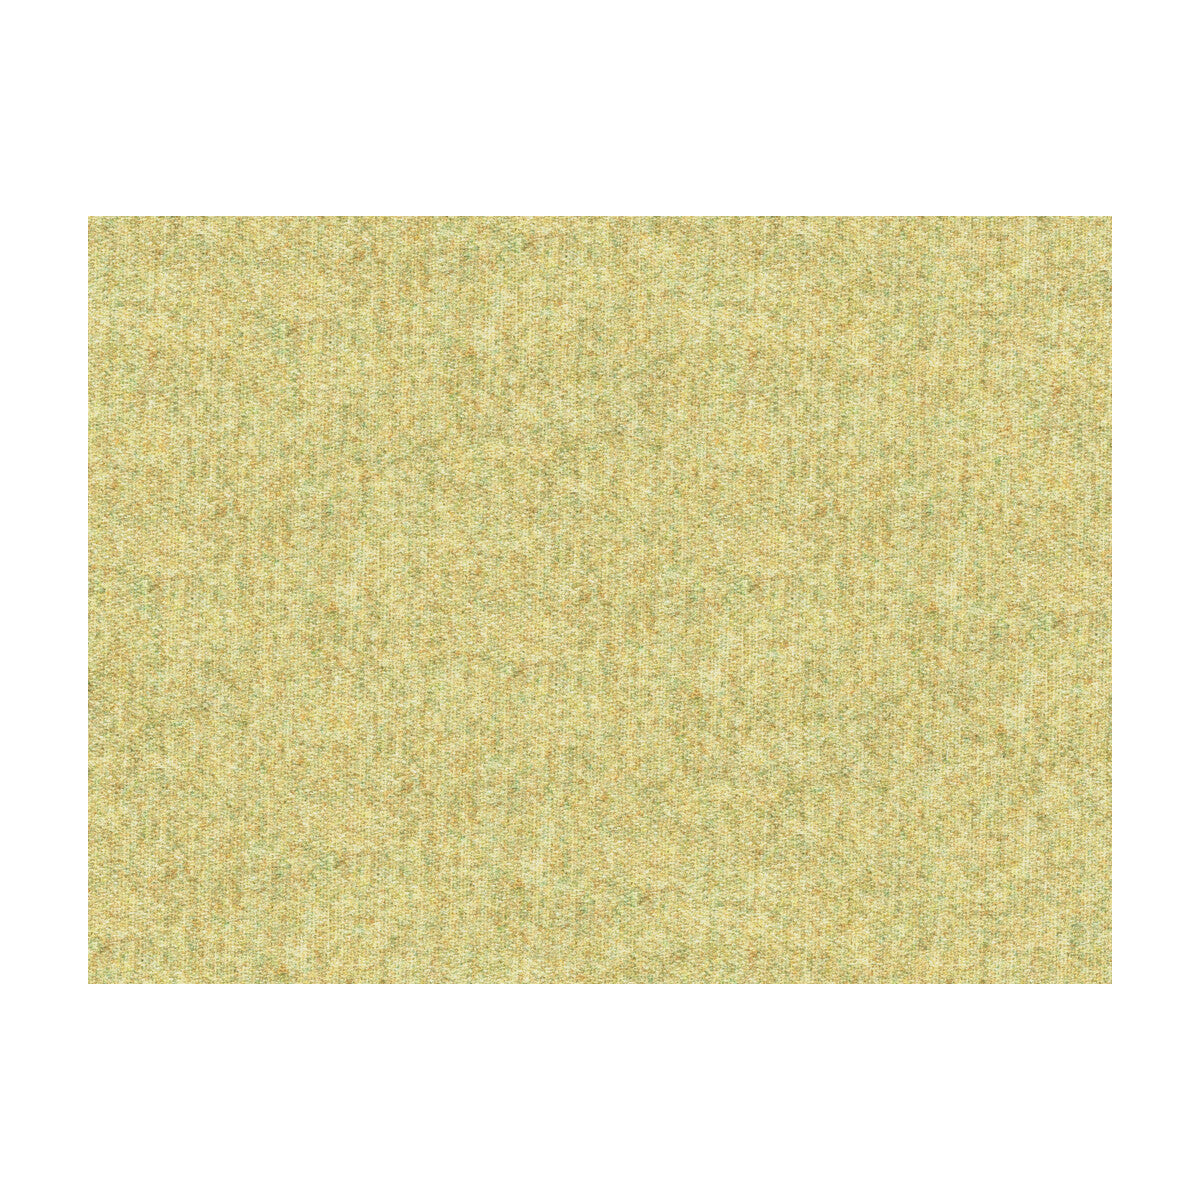 Chevalier Wool fabric in seafoam color - pattern 8013149.123.0 - by Brunschwig &amp; Fils